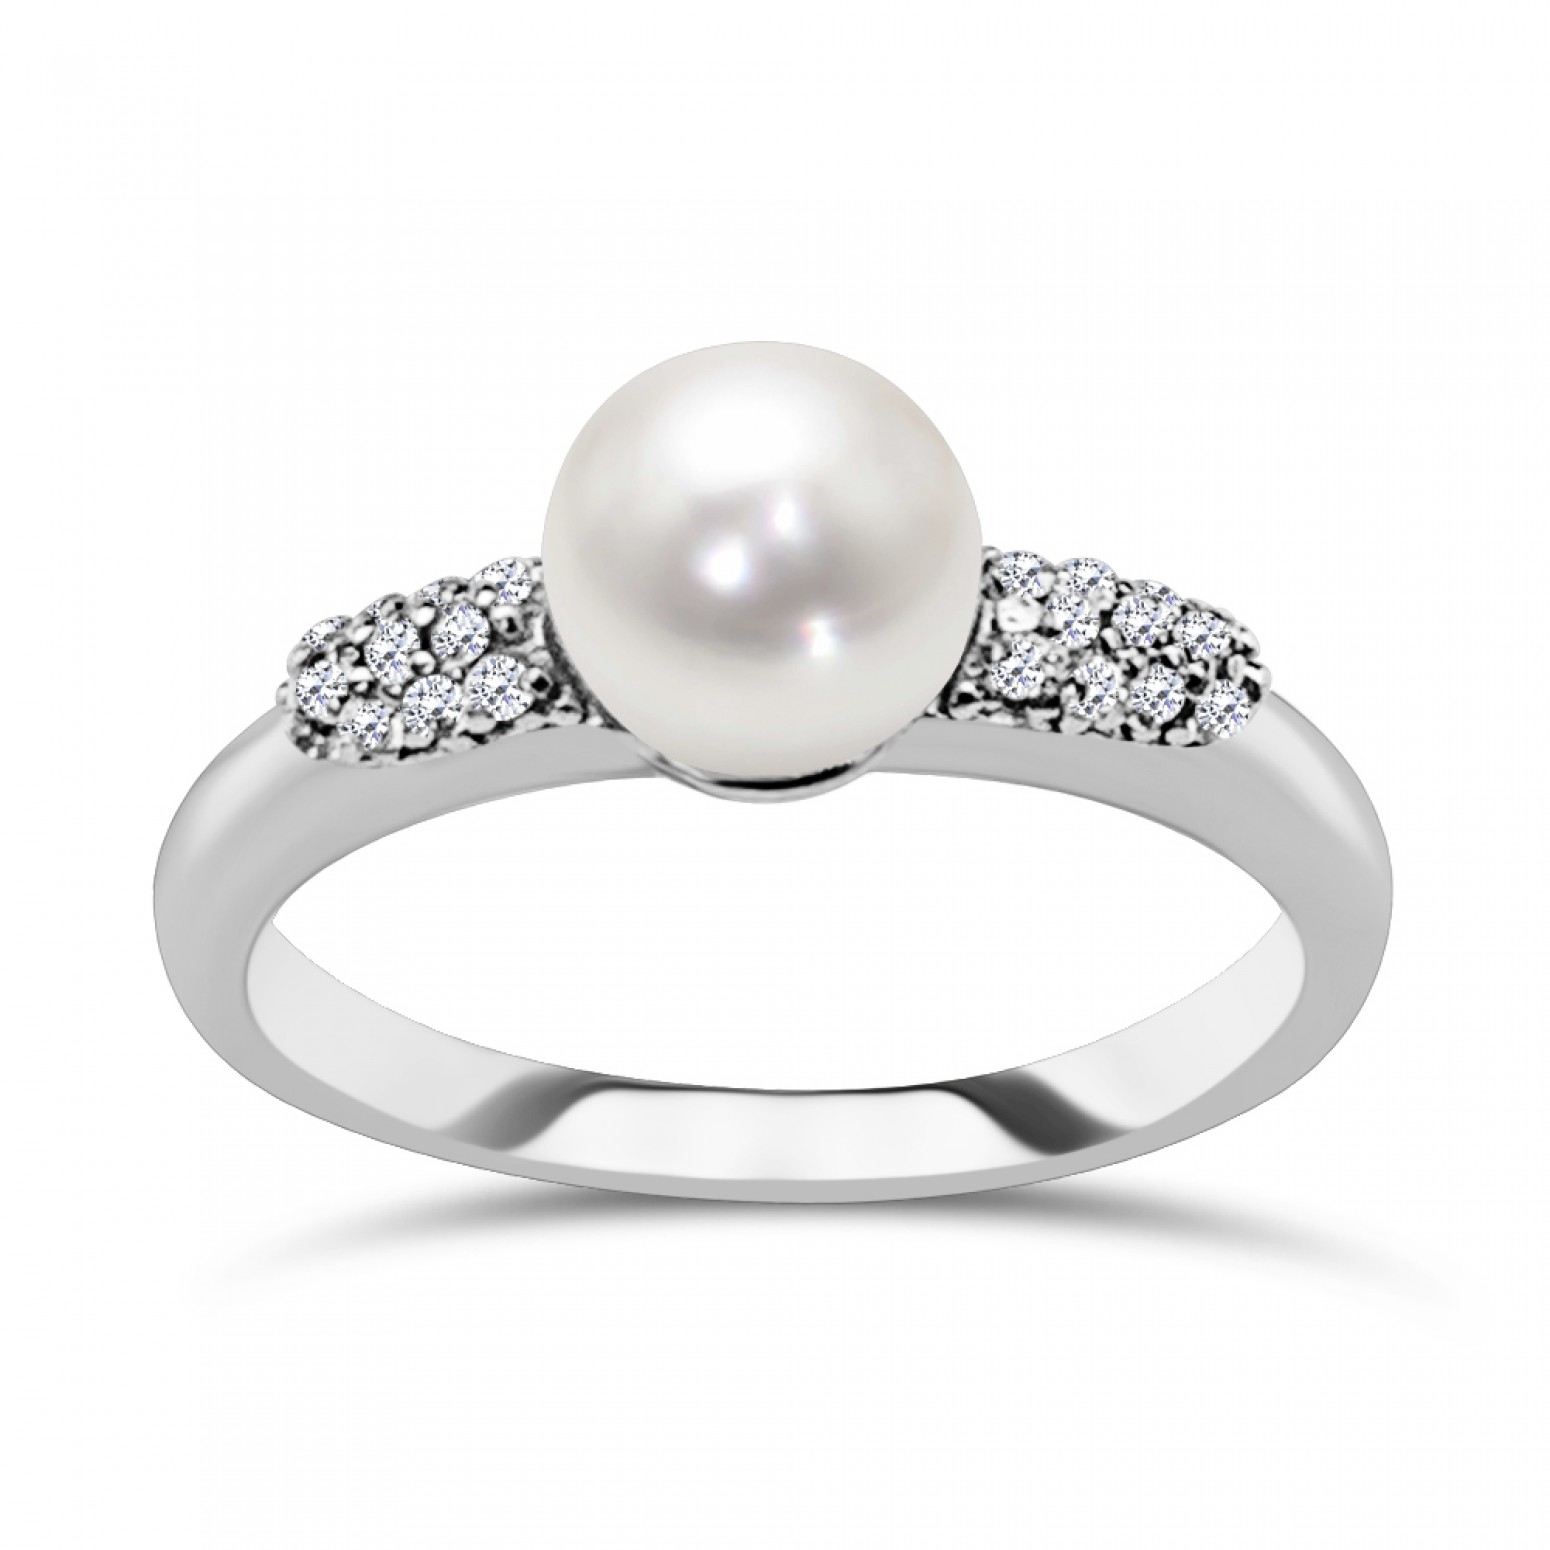 Multistone ring 14K white gold with pearl and zircon, da3618 ENGAGEMENT RINGS Κοσμηματα - chrilia.gr